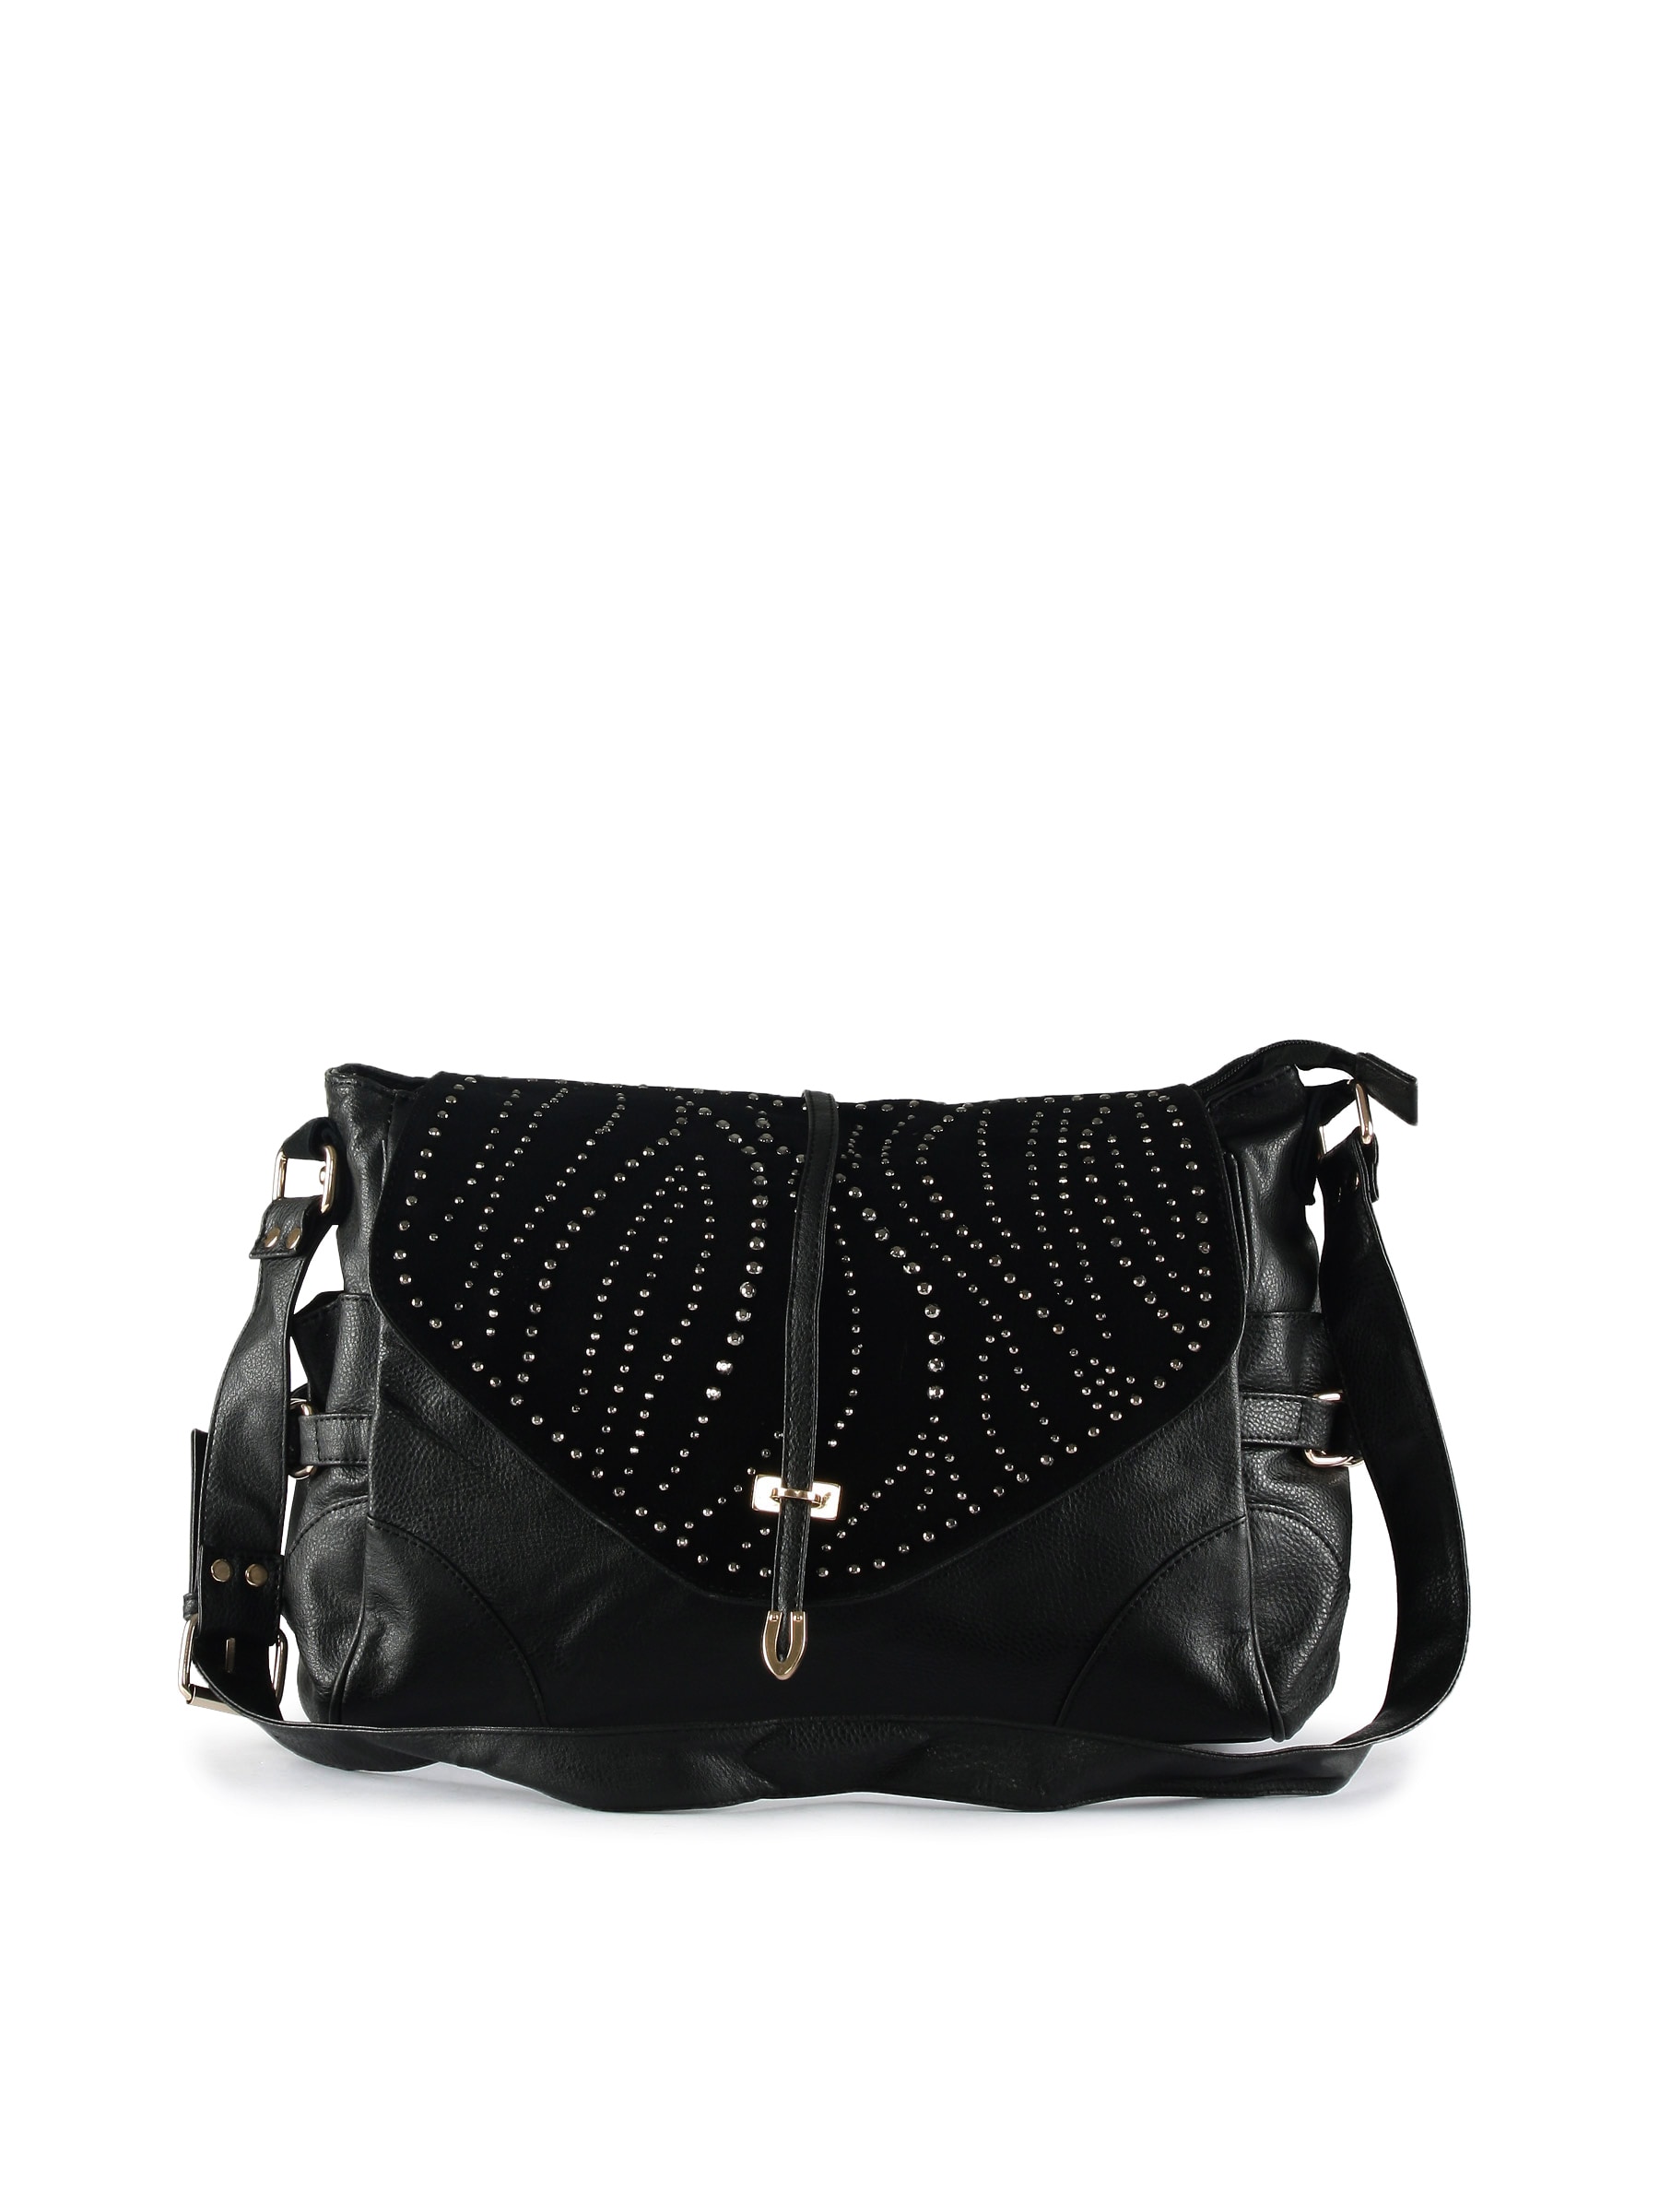 Kiara Women Sequins Black Handbag